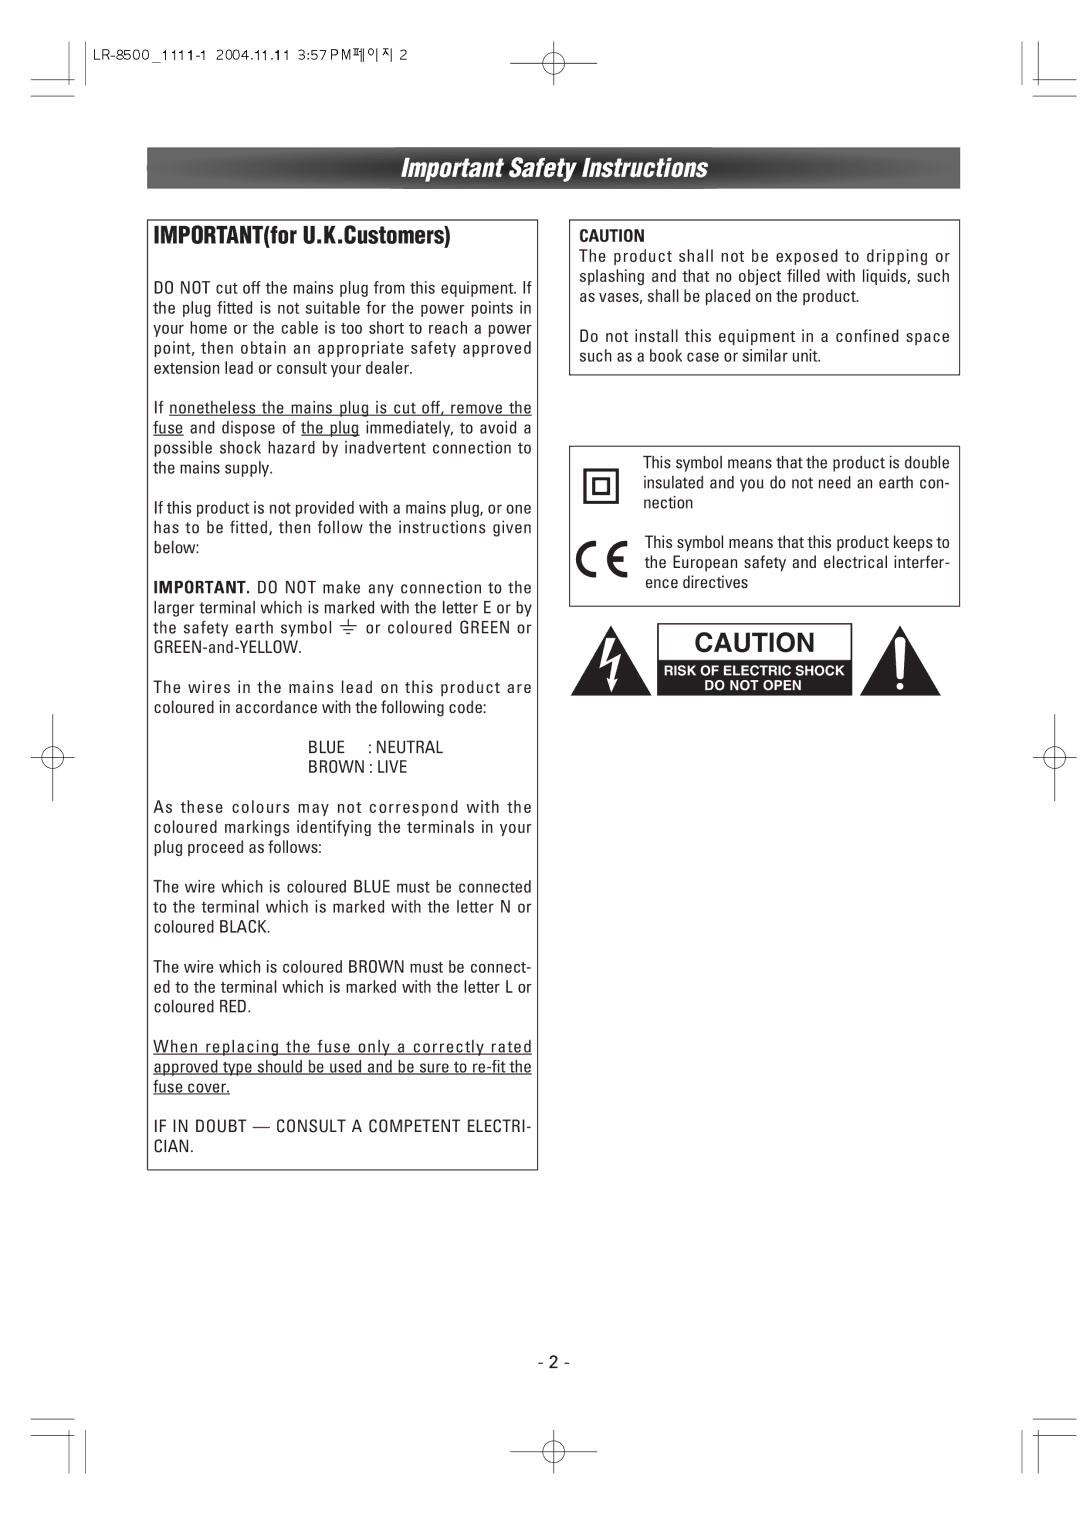 Dantax LR-8500 manual Important Safety Instructions, IMPORTANTfor U.K.Customers, Blue Neutral Brown Live 